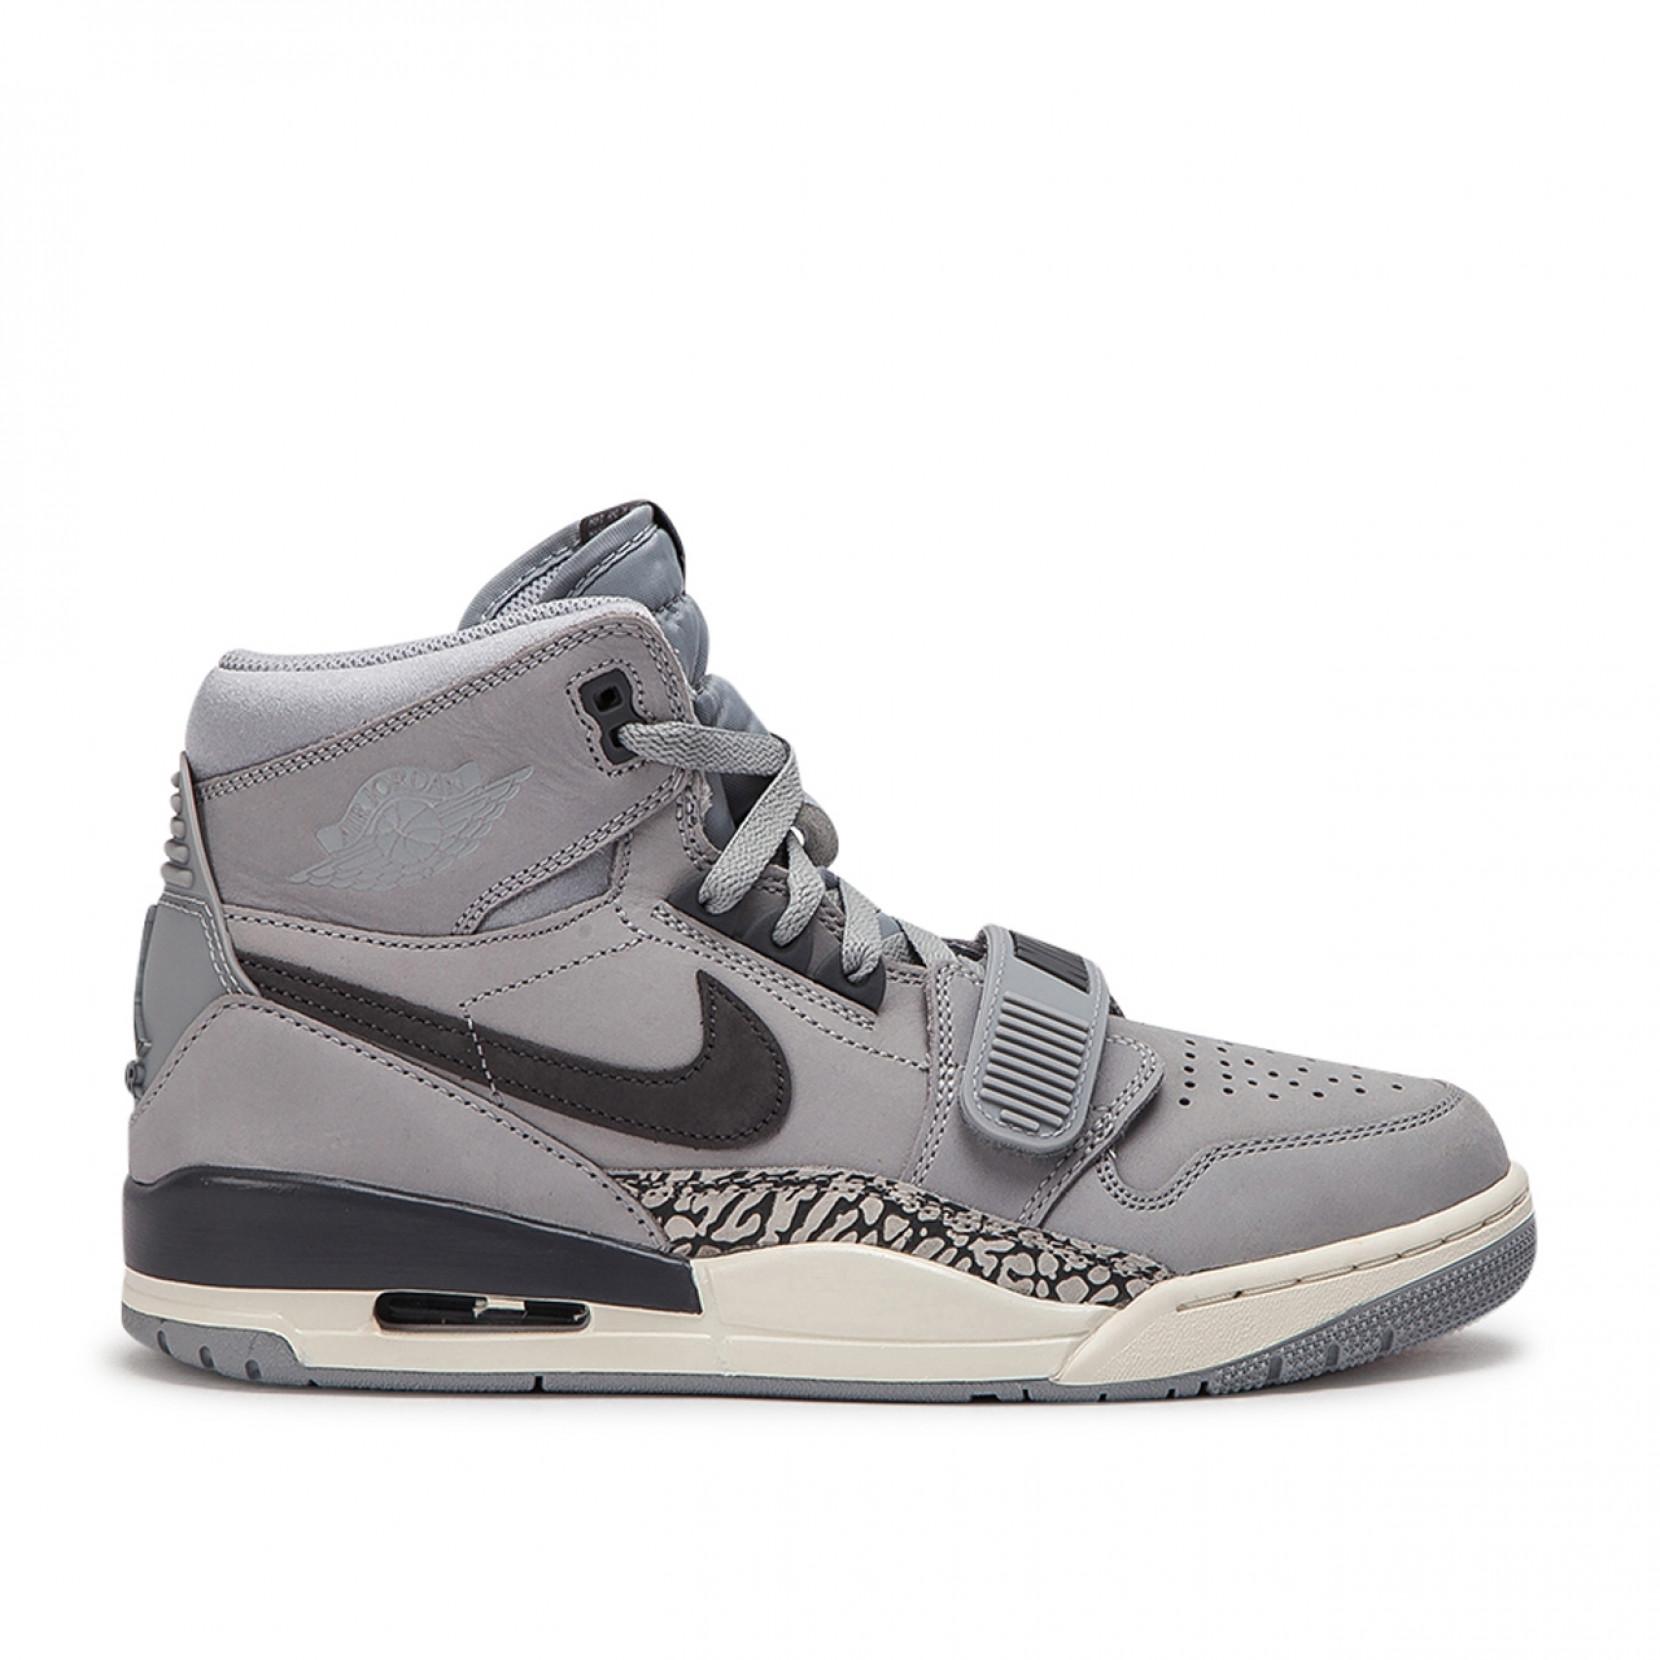 Nike Leather Nike Air Jordan Legacy 312 in Grey (Gray) for Men - Lyst